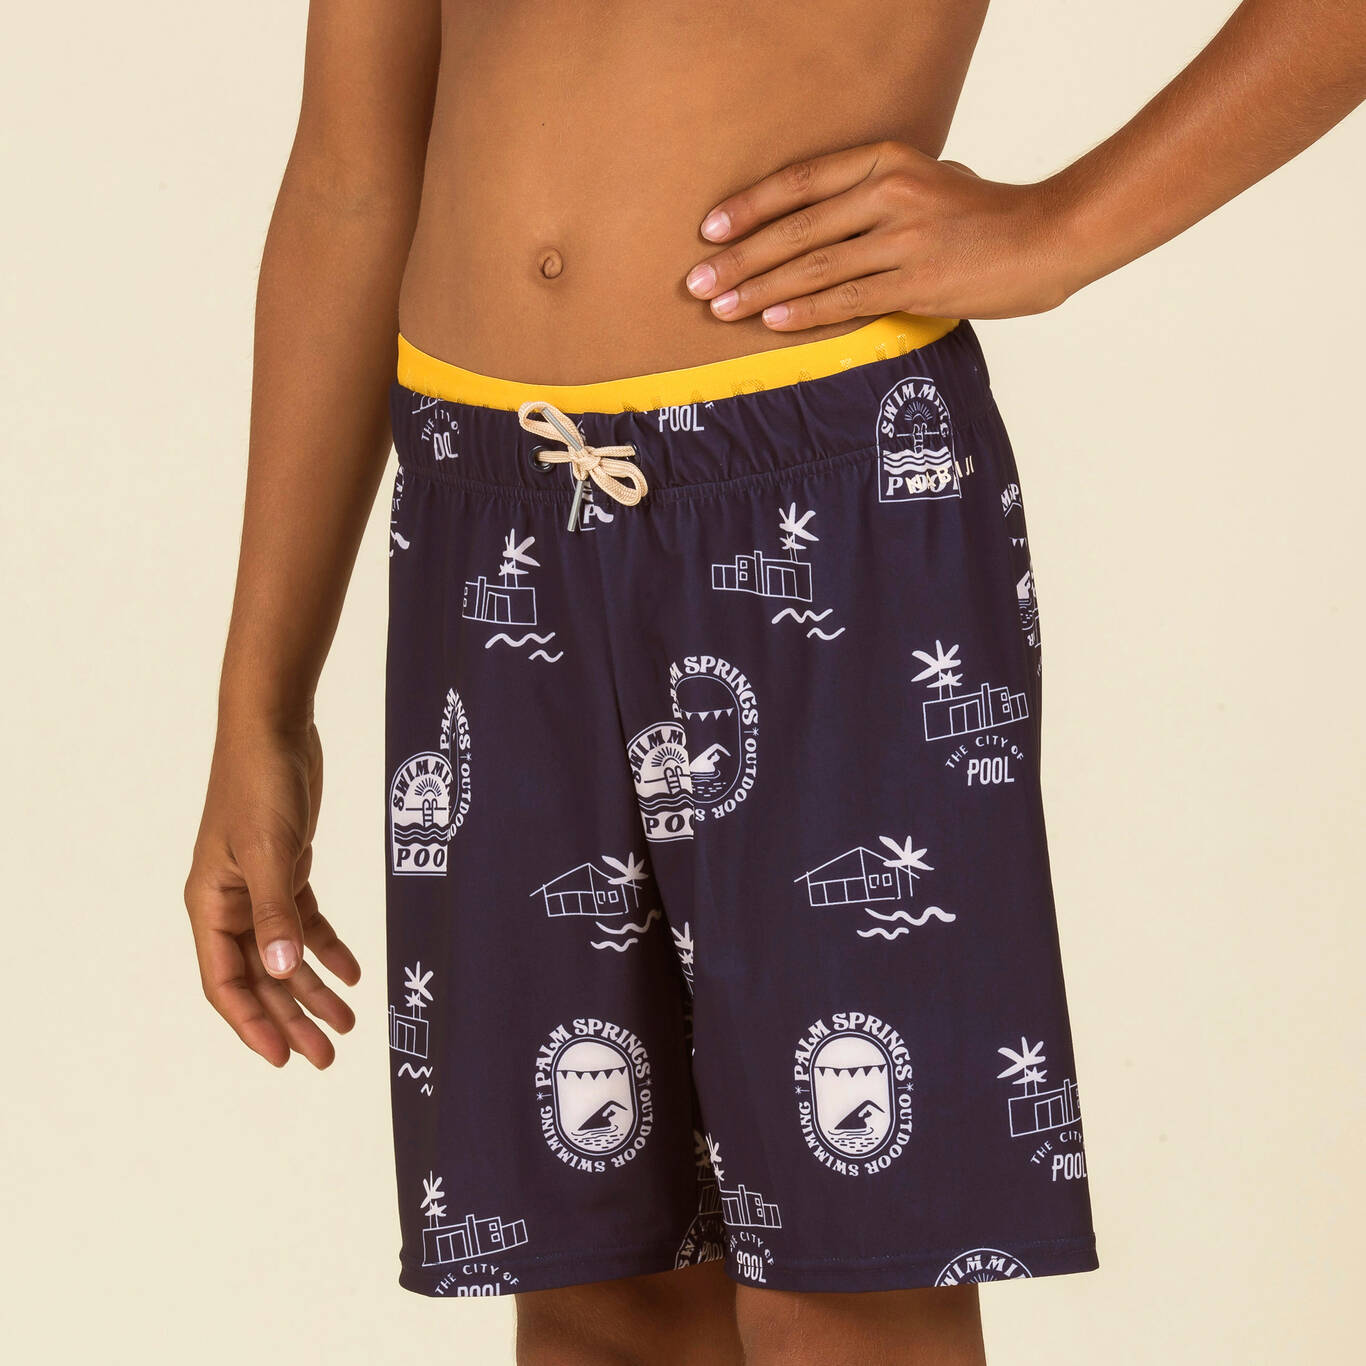 Celana Renang Anak Laki-laki - 100 Long - Pool Navy Blue/Ochre